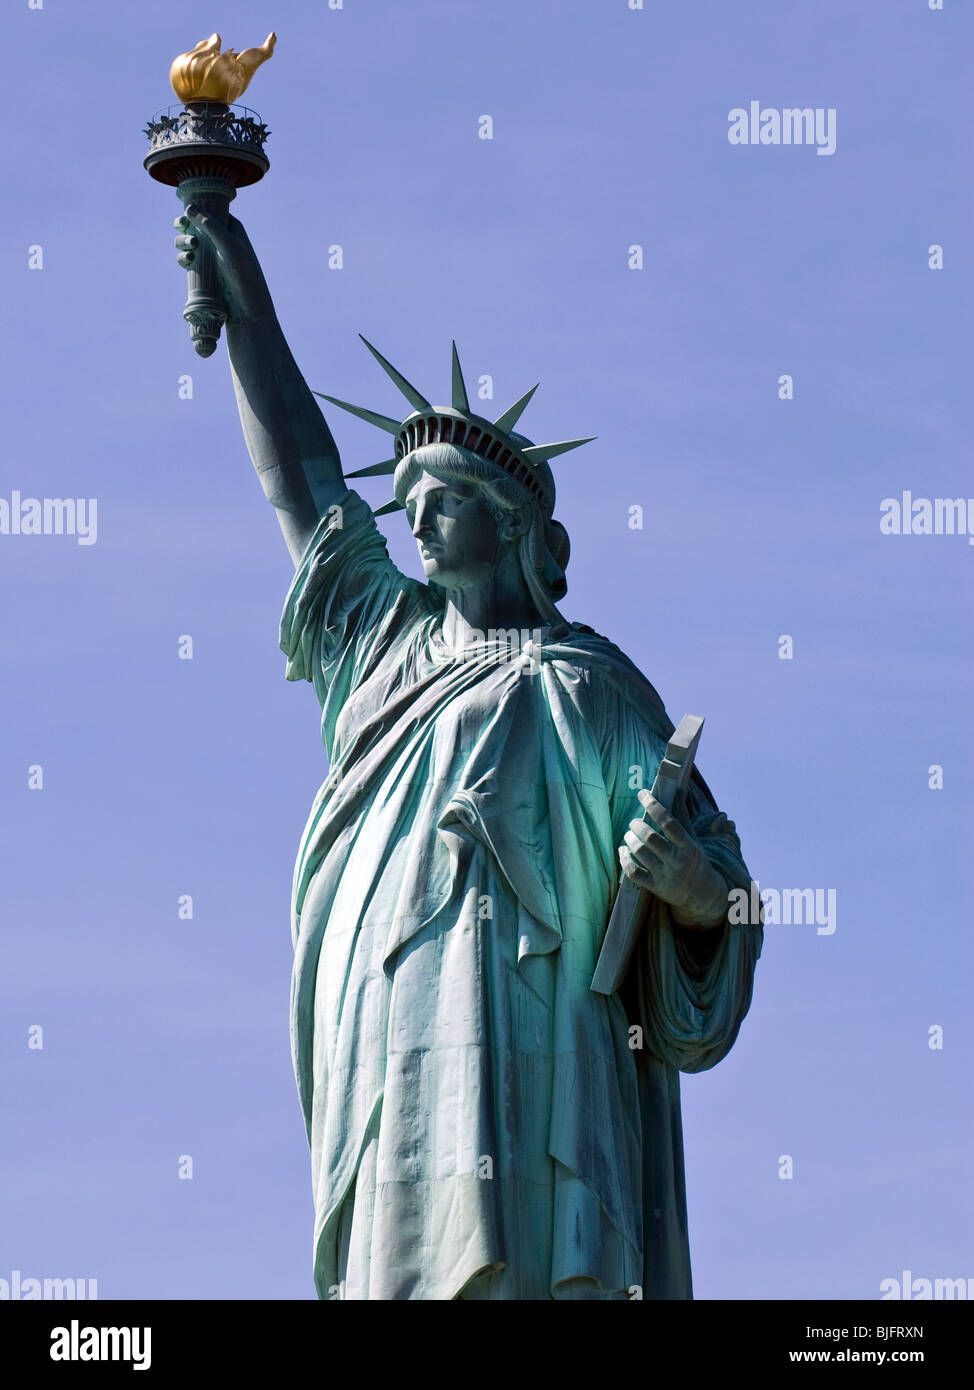 La estatua de la libertad - Nueva York - Septiembre 2009 Foto de stock